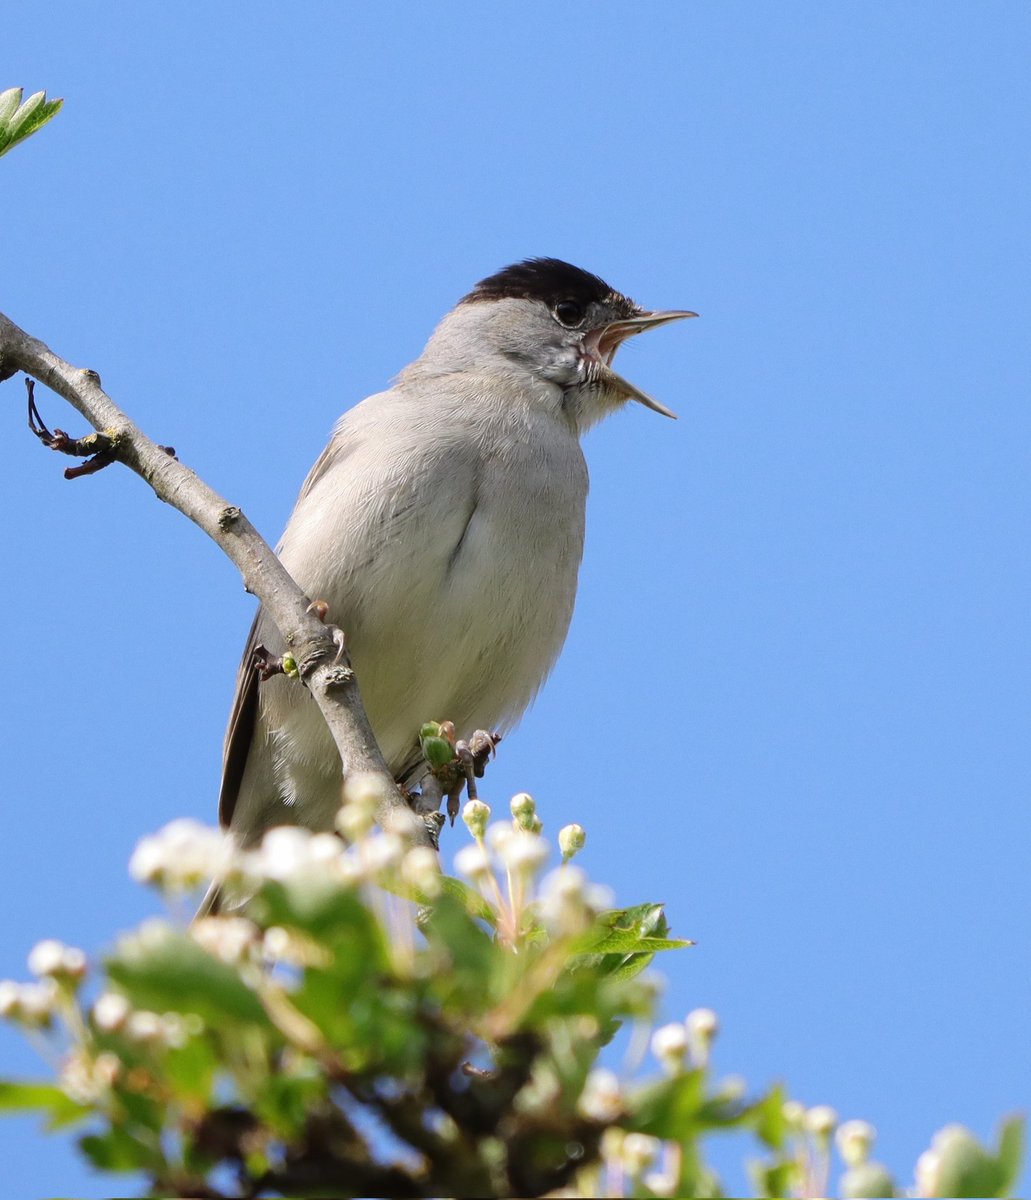 Singing Blackcap this morning at Storton's Pits Nature Reserve, Northampton. @wildlifebcn #Northantsbirds @Natures_Voice @NatureUK @Britnatureguide #BirdsSeenIn2024 #NaturePhotography #TwitterNatureCommunity